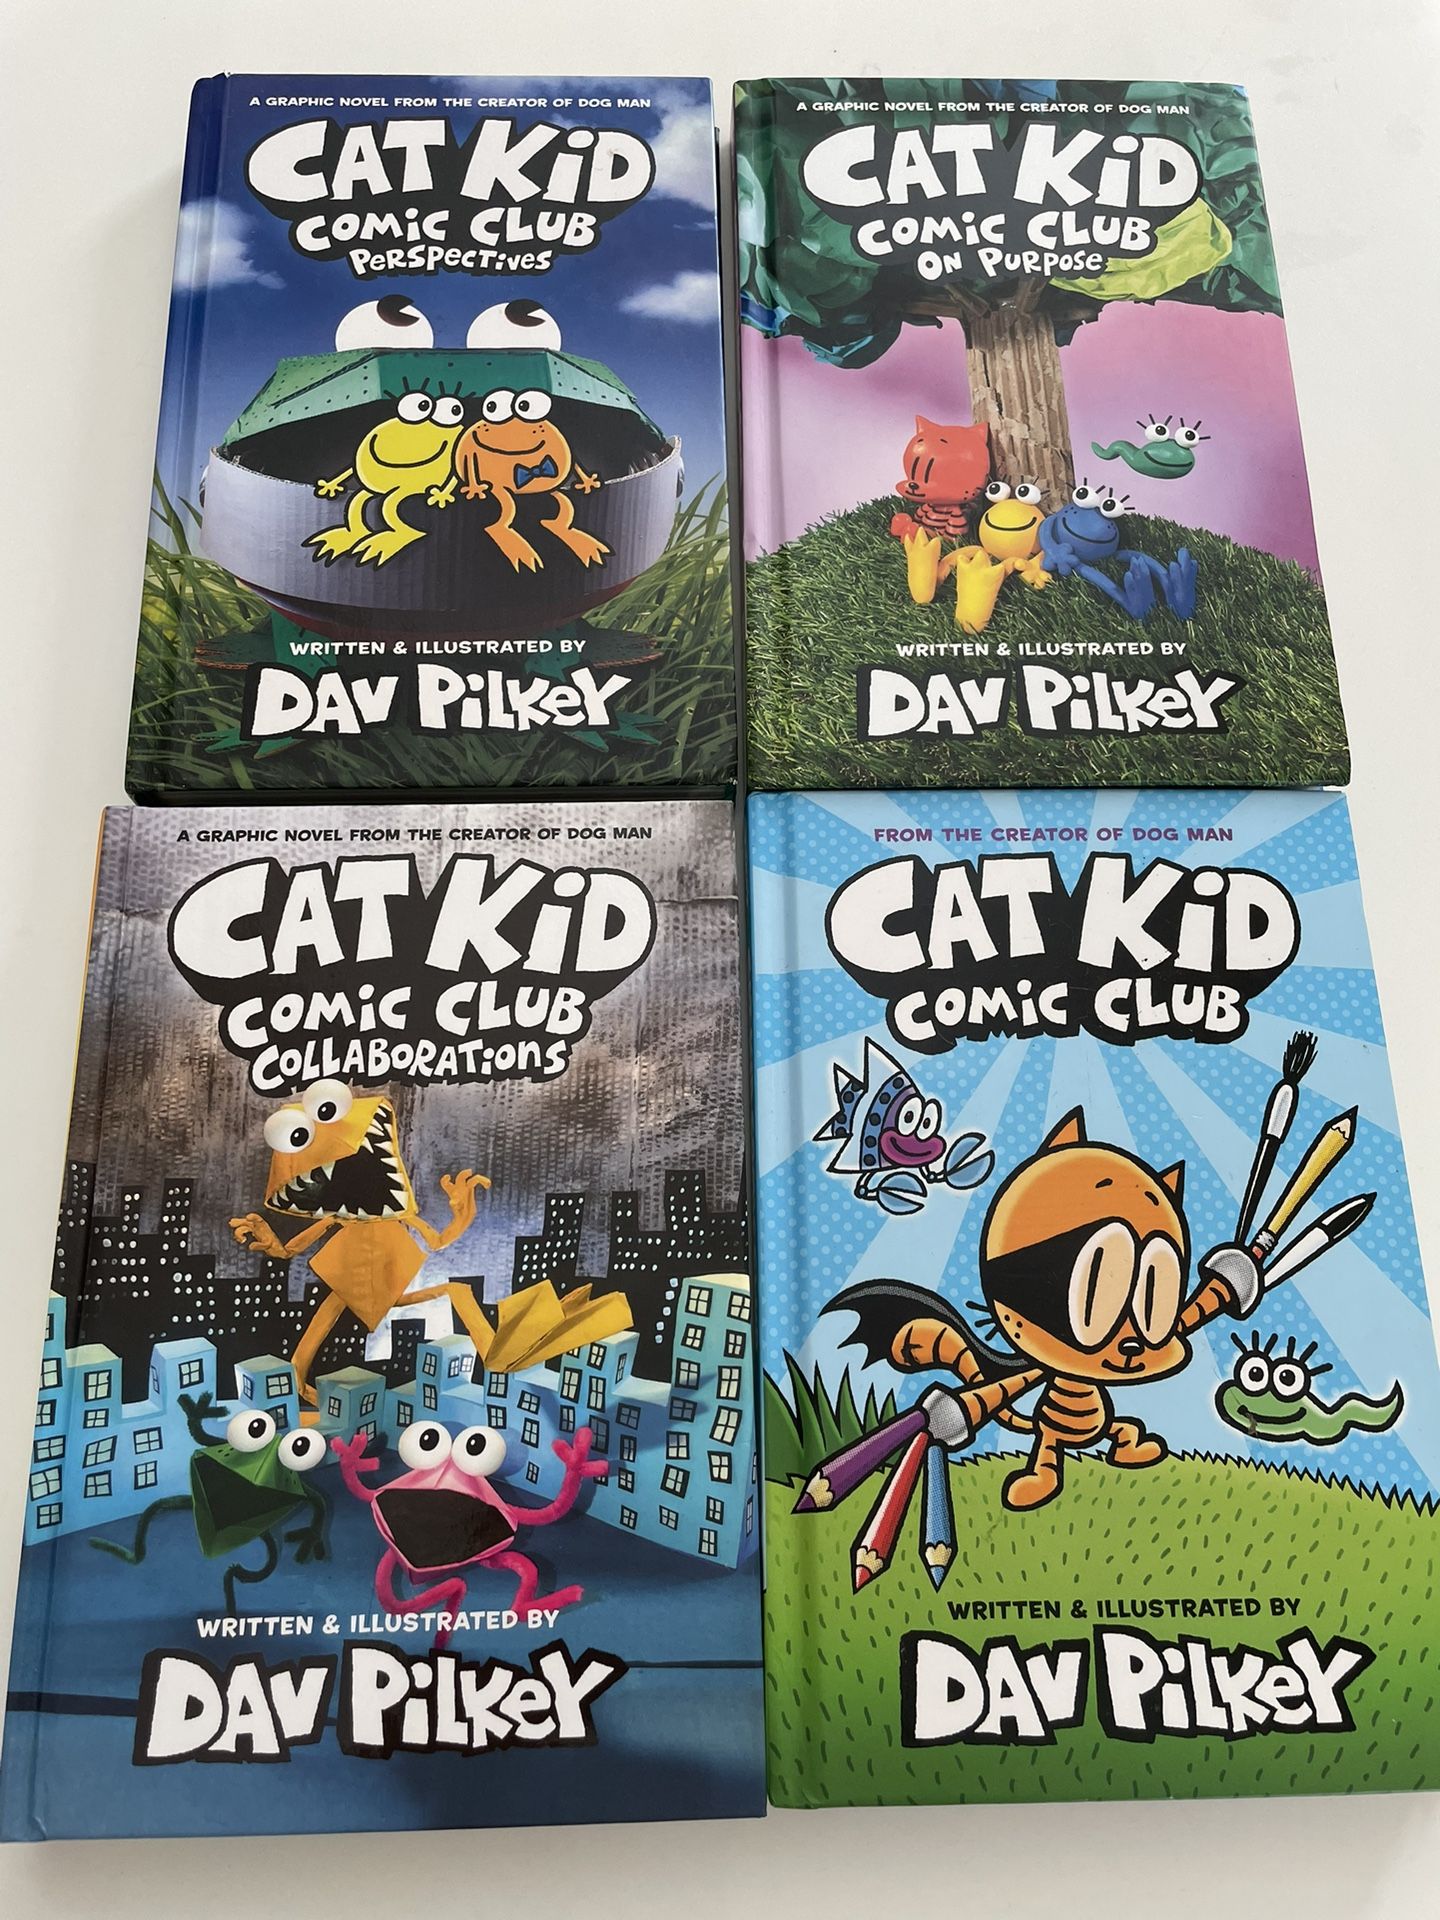 Cat Kid Comic Club Books By Dav Pilkey. Near New Condition